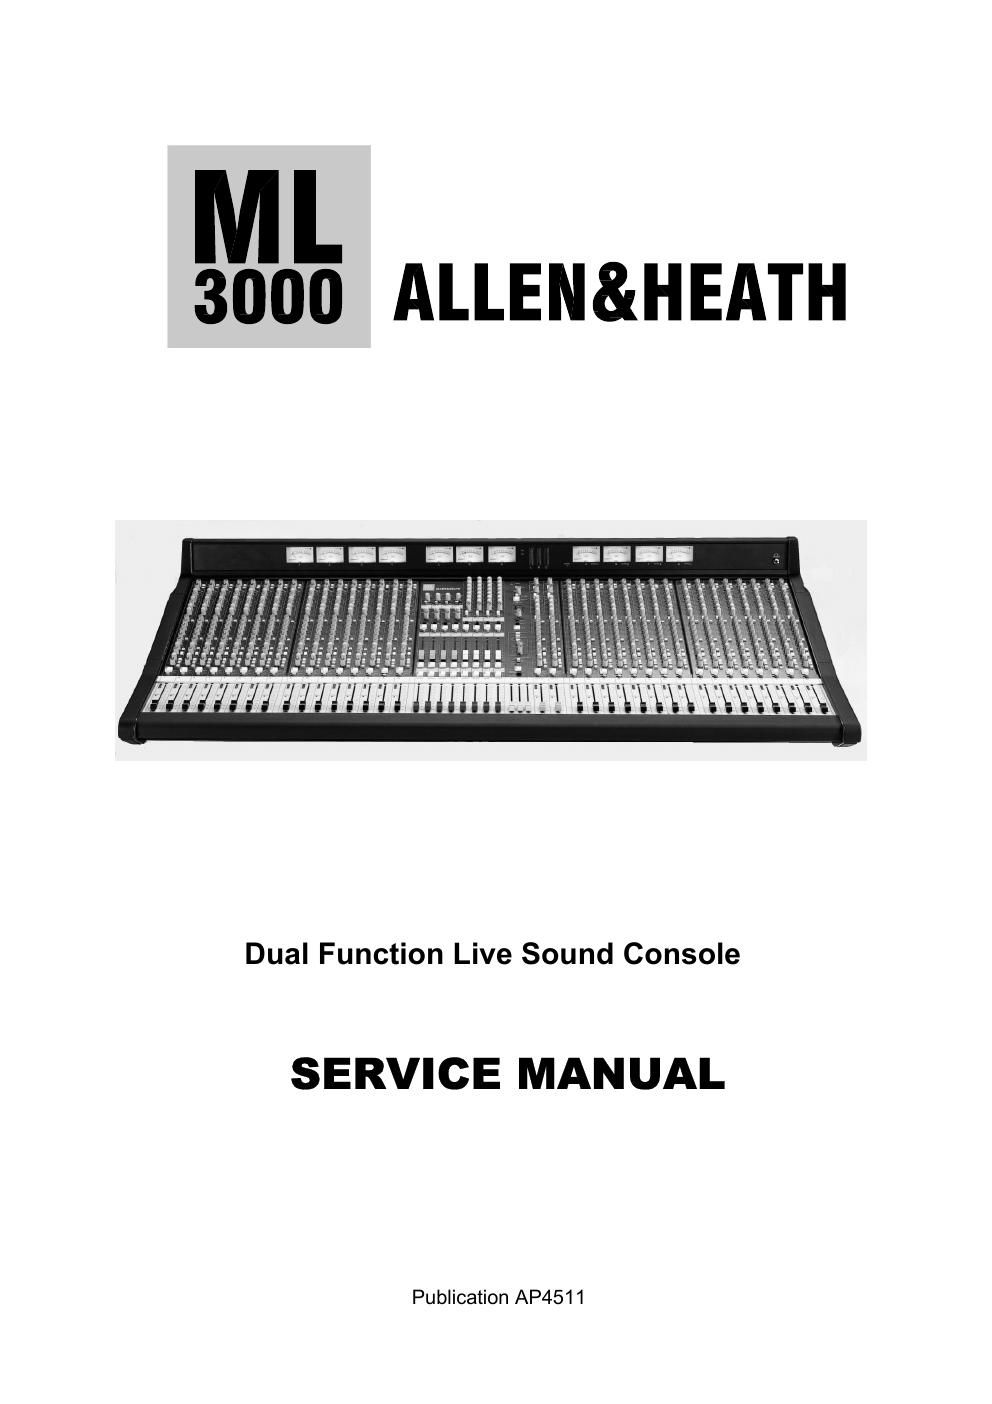 allen heath ml3000 service manual